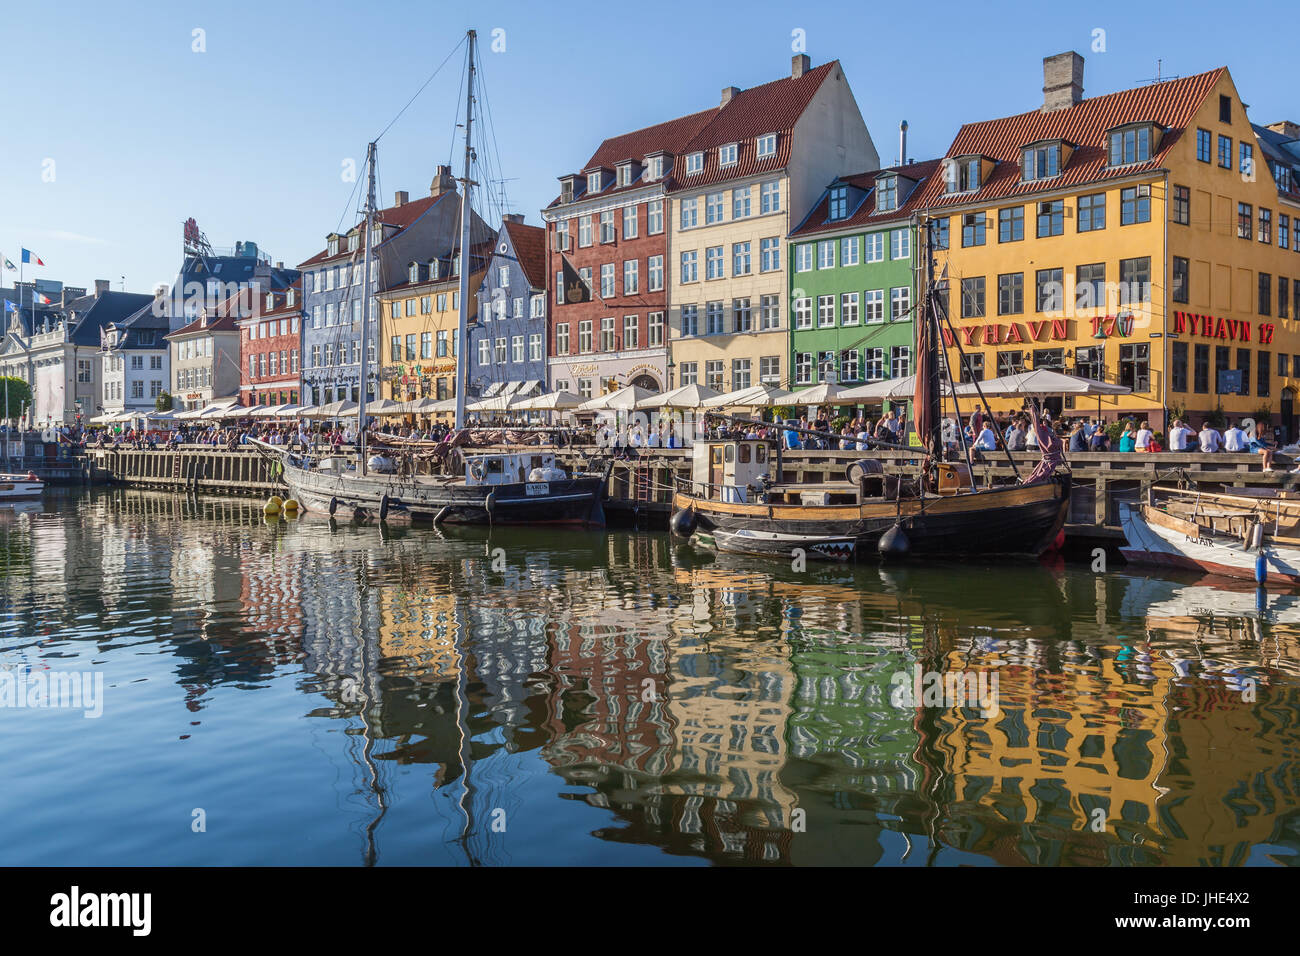 Nyhavn (New Harbor)in Copenhagen, Denmark Stock Photo